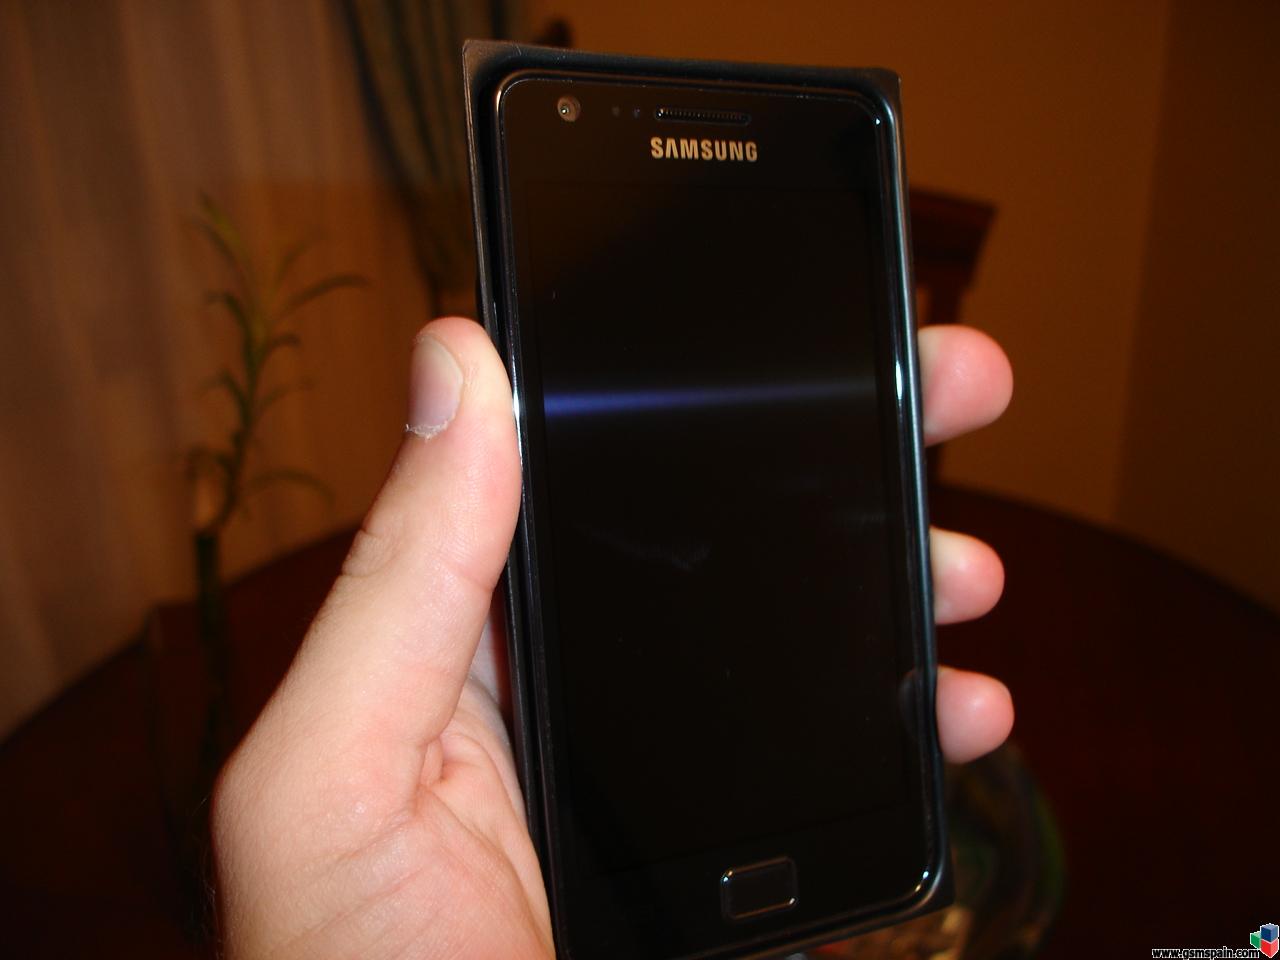 [VENDO] Vendo Samsung Galaxy S2 negro